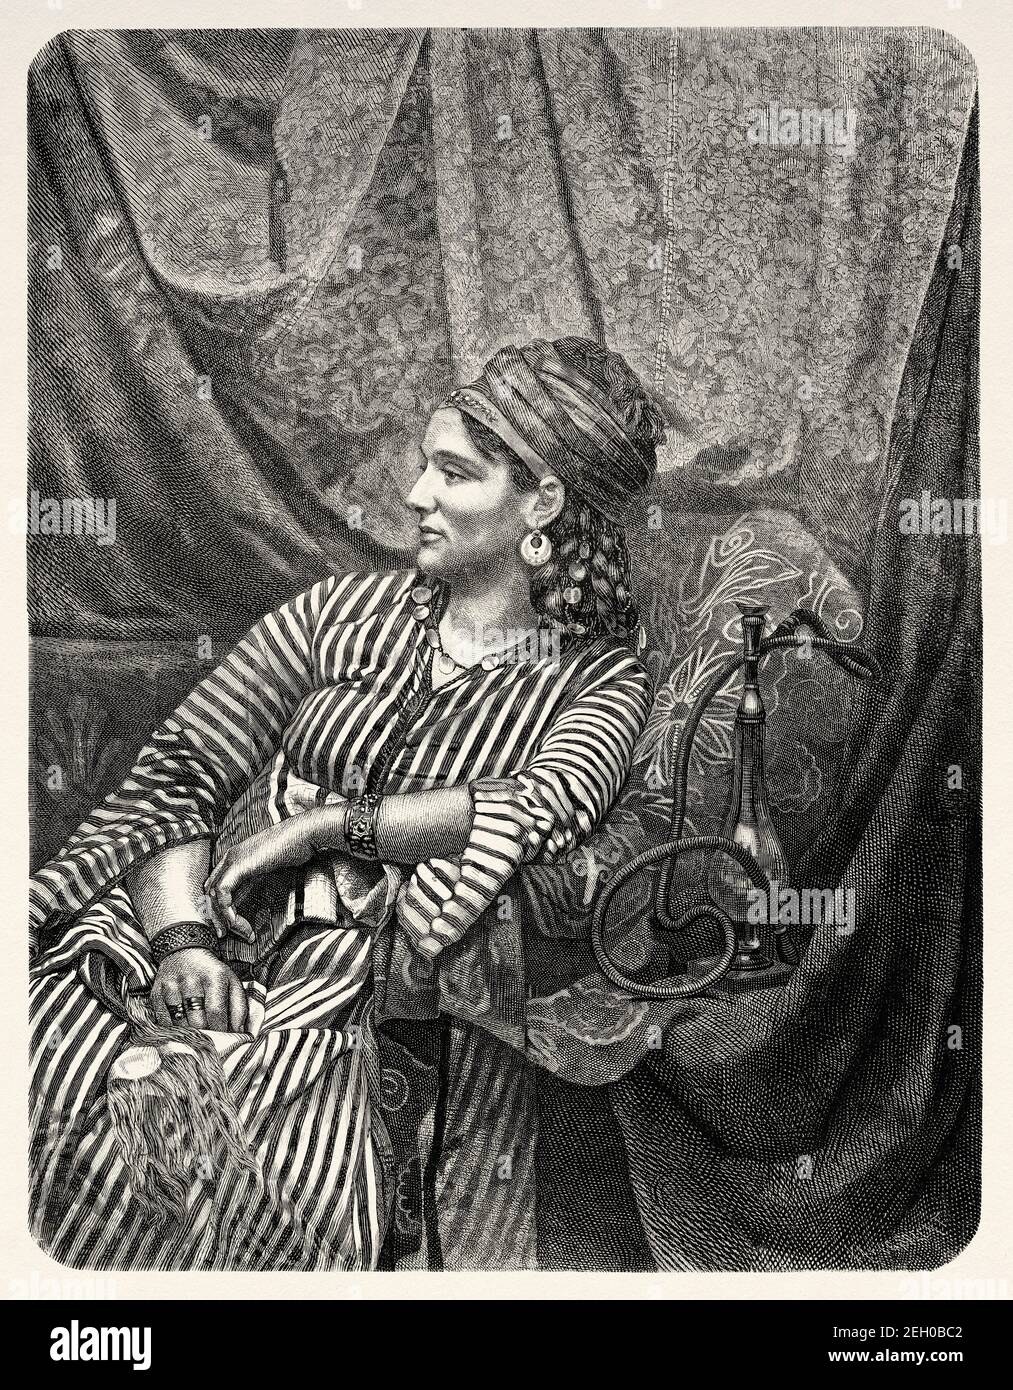 Elegant Syrian Woman. Damascene woman dressed in traditional 19th century clothing, Syria. Old 19th century engraved illustration from El Mundo Ilustrado 1879 Stock Photo